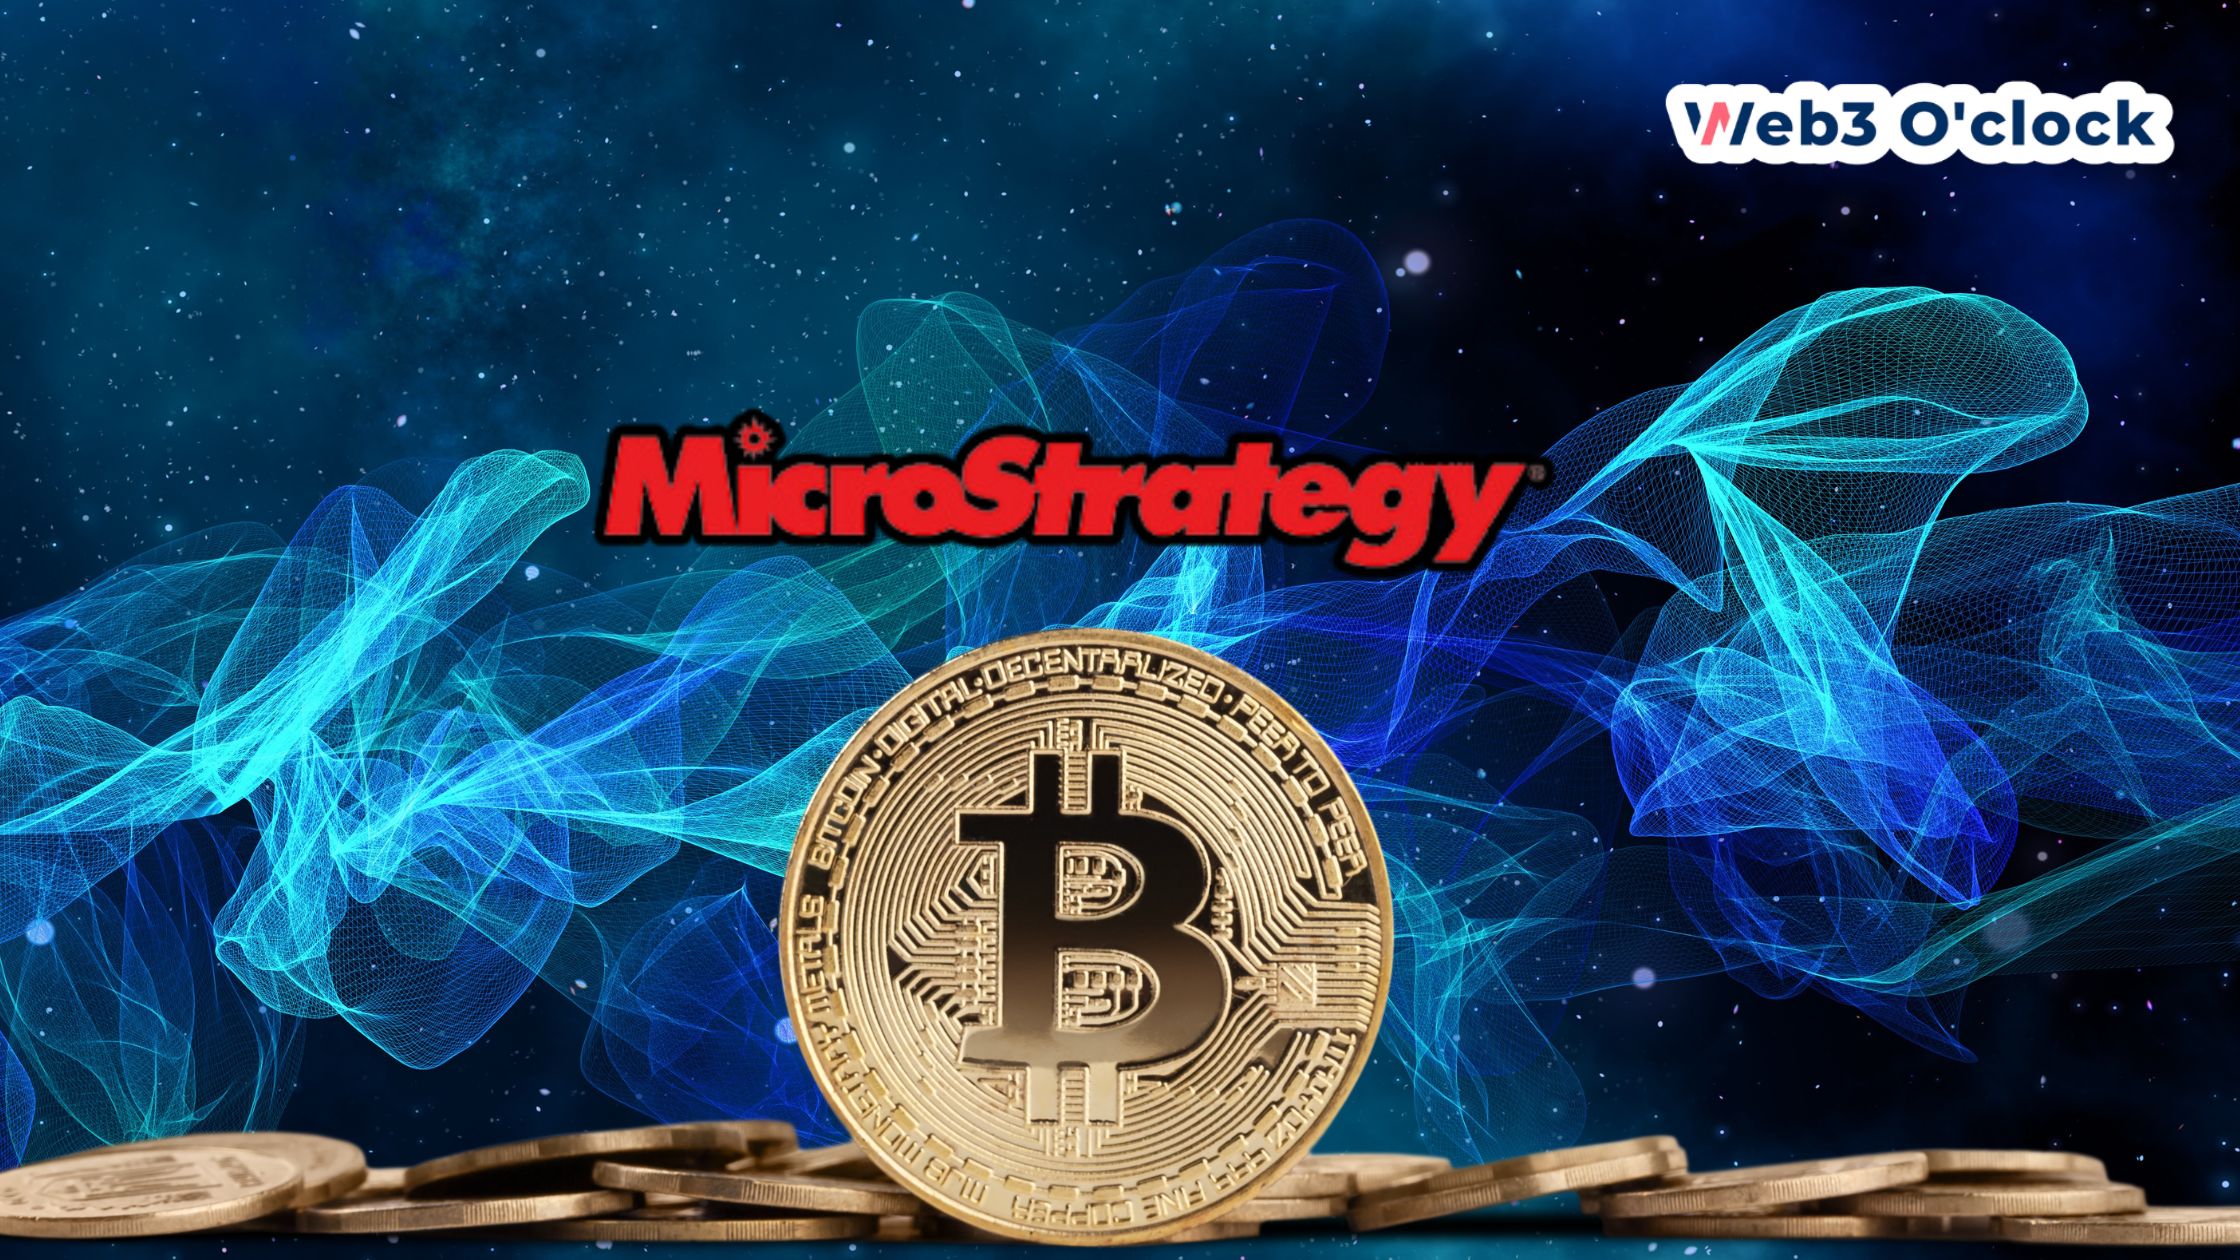 MicroStrategy Rockets to Profitability with $4.4 Billion Worth of Bitcoin!